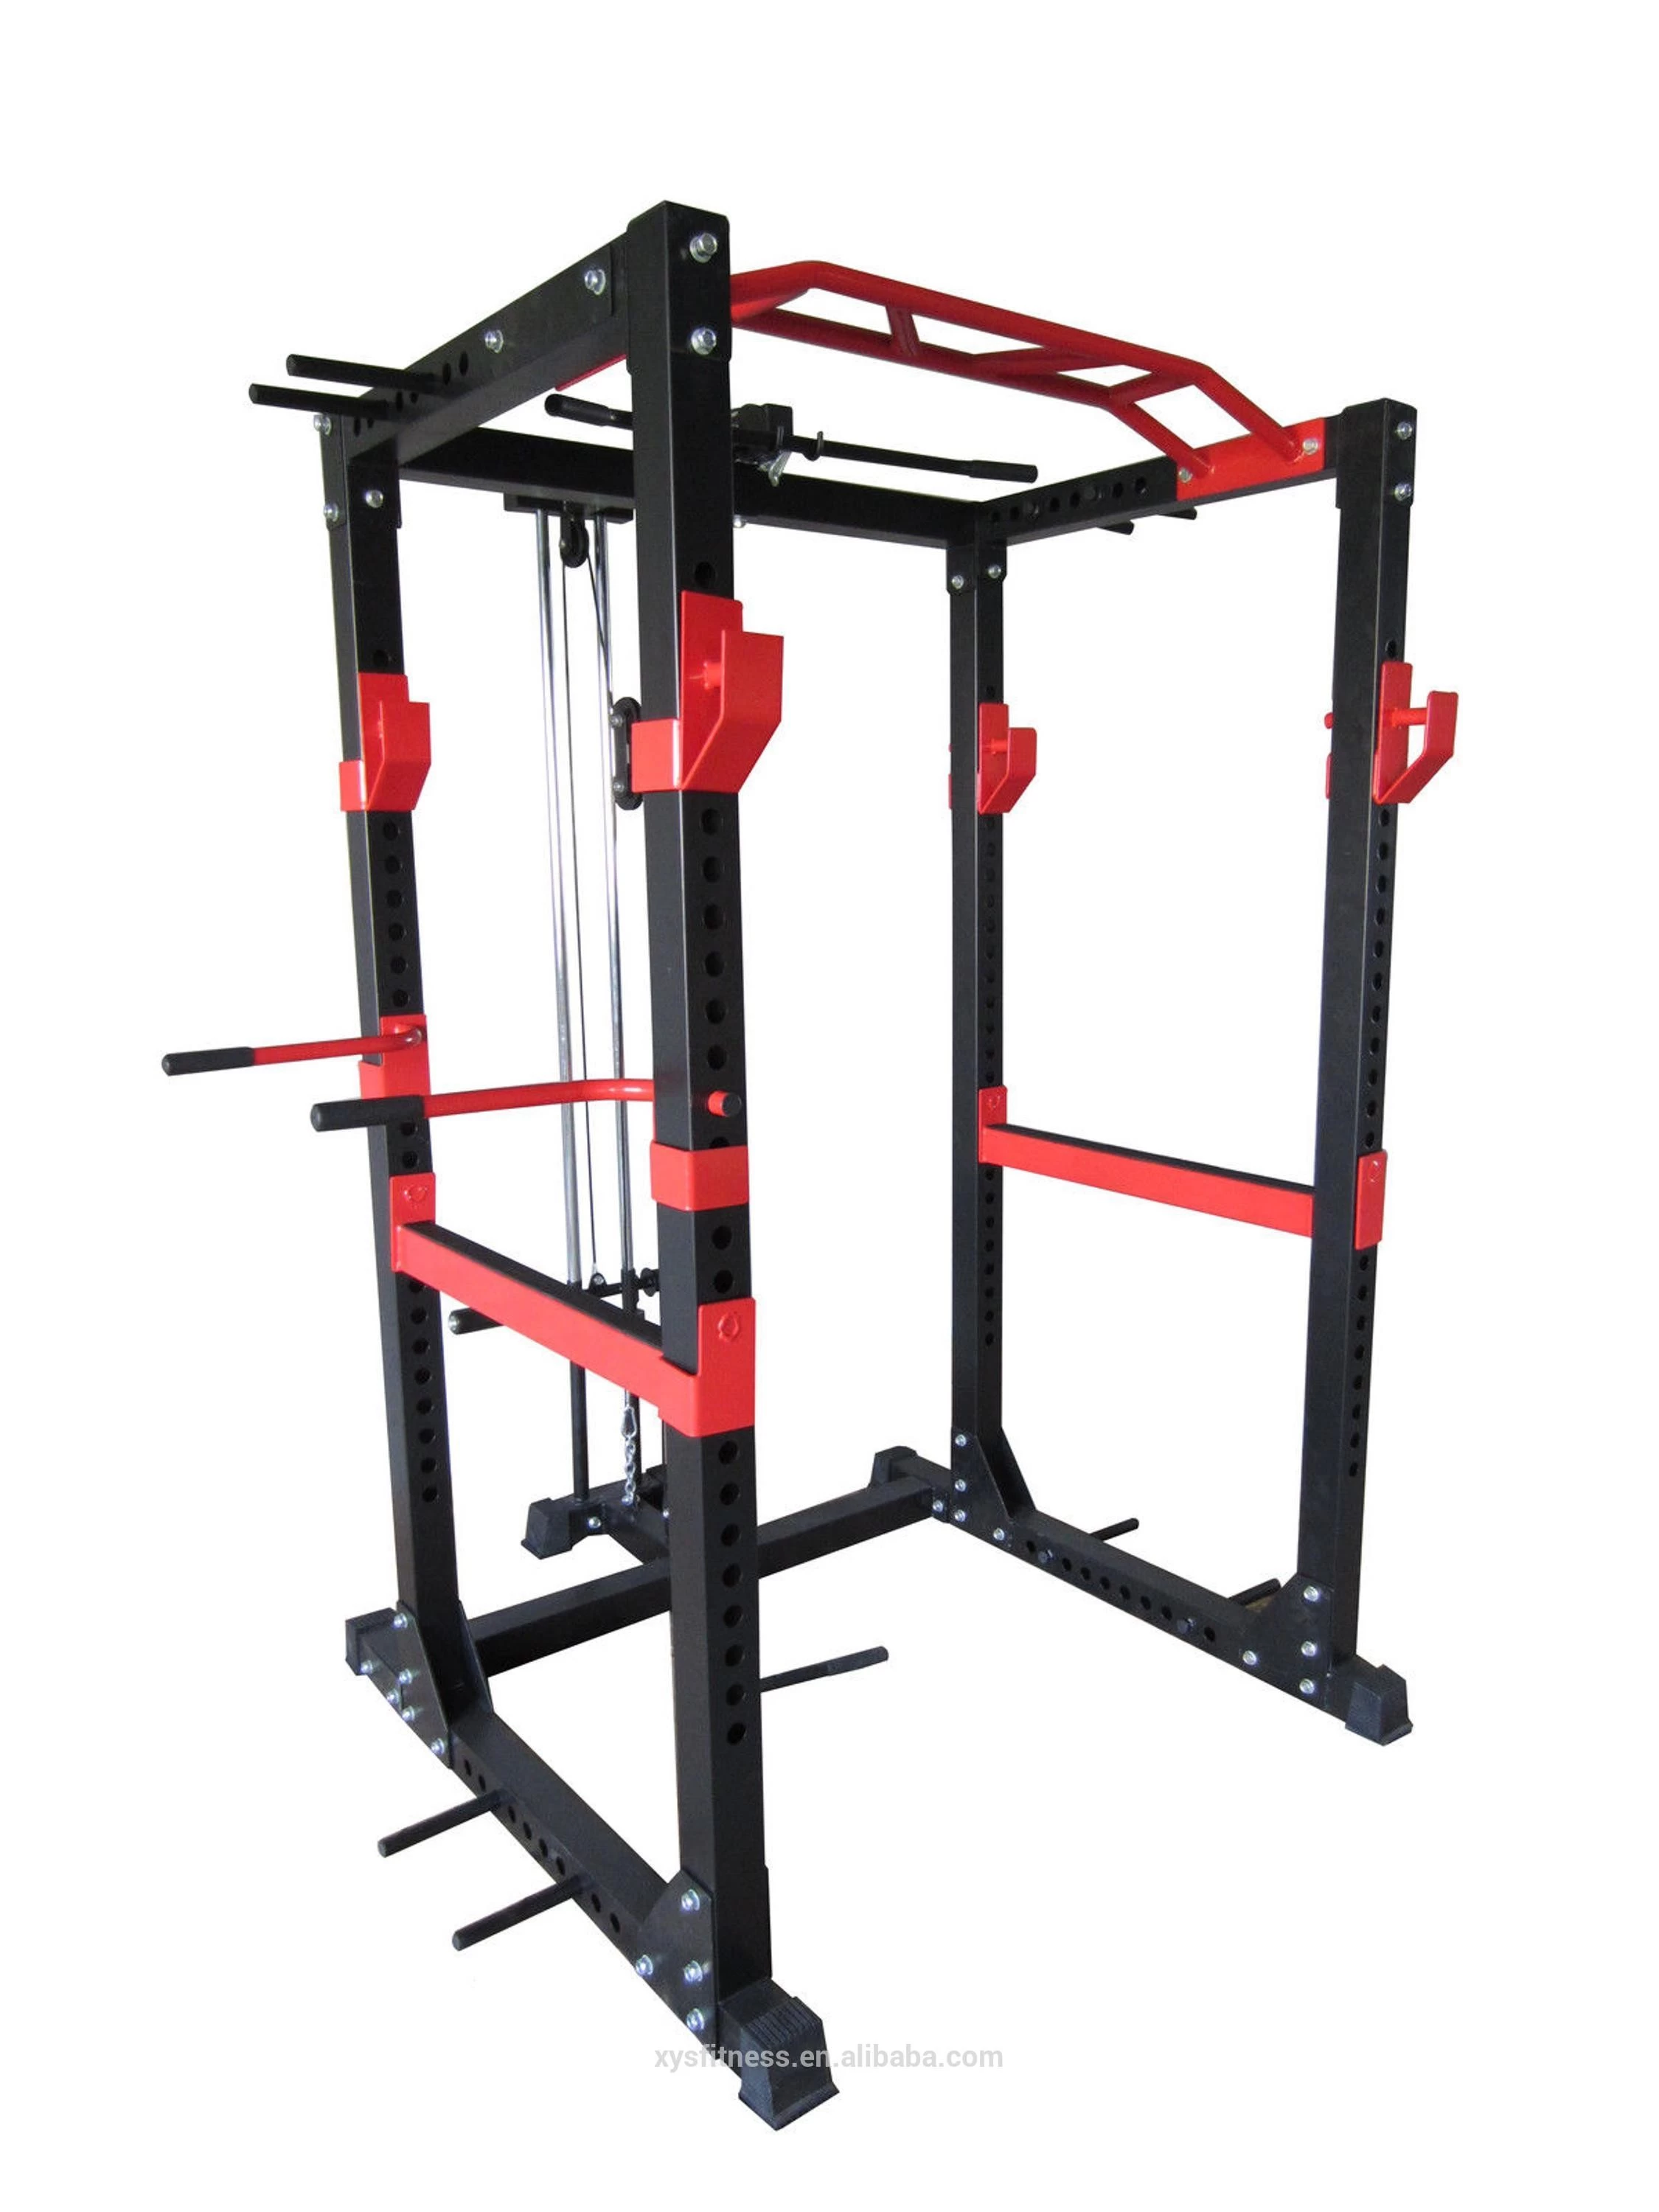 Chine Fournisseurs Smith Machine Squat Rack power rack Machines de gymnastique